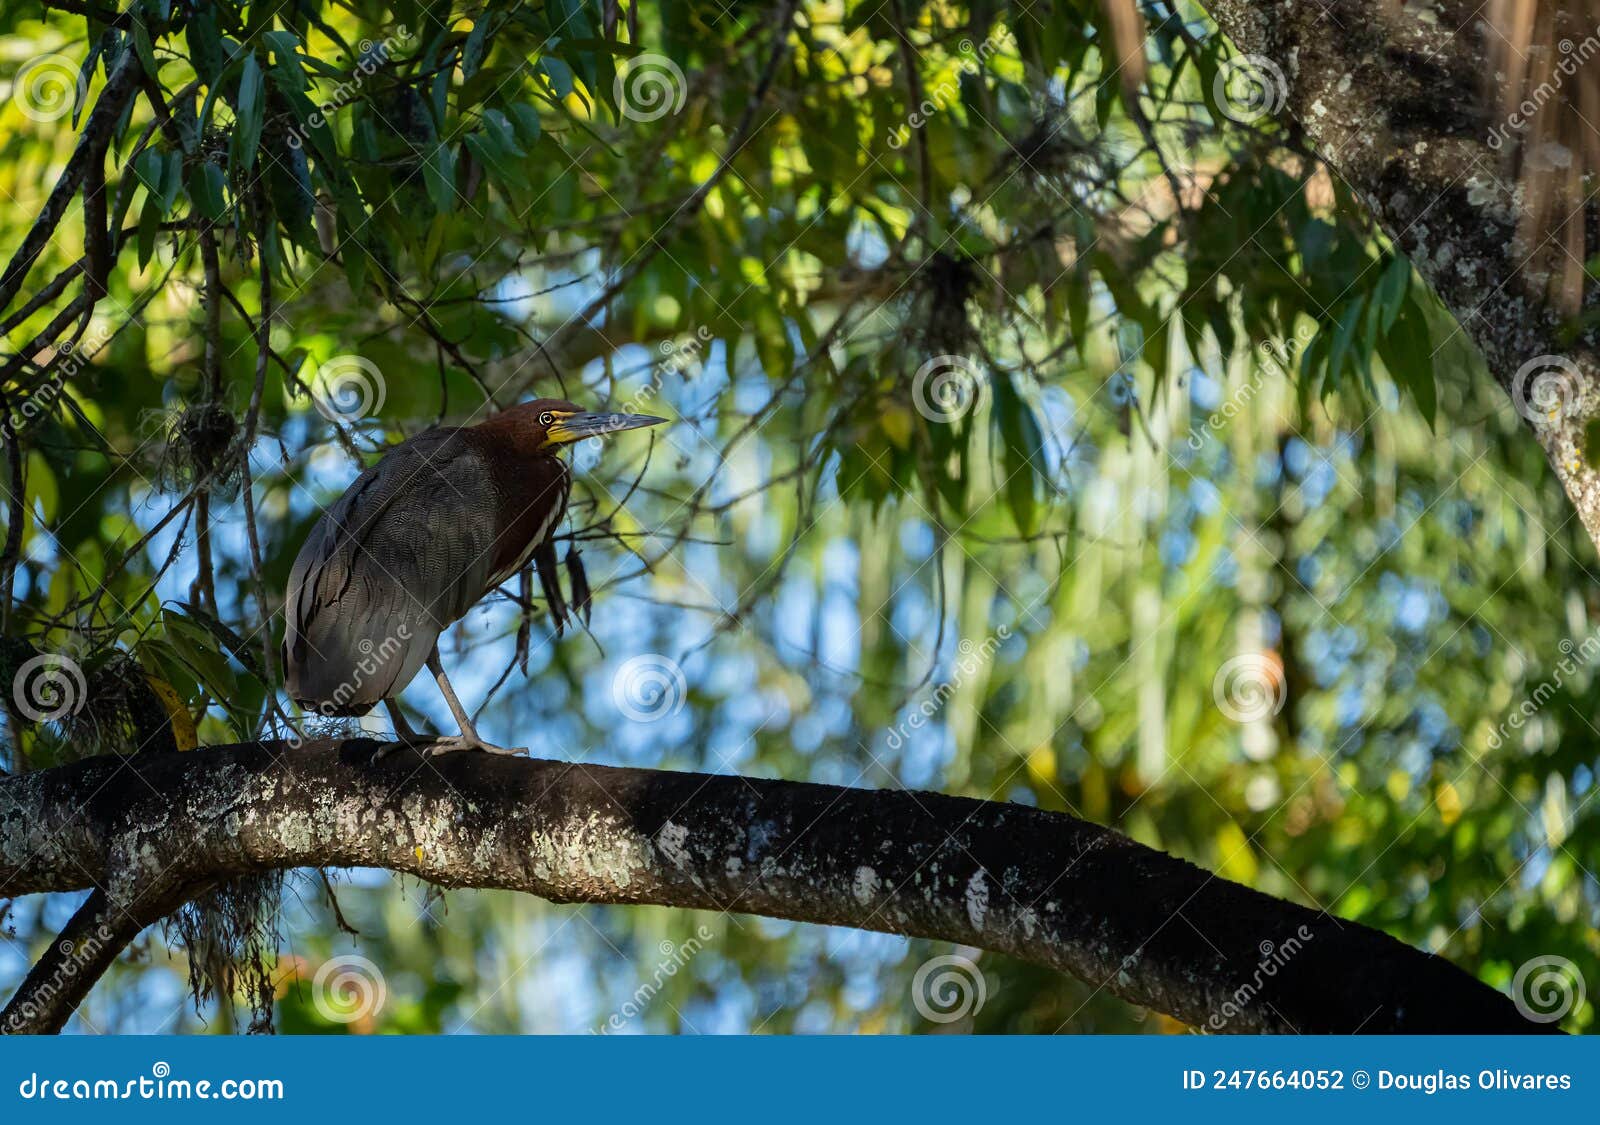 heron or garza tigre colorada resting on a tree branch. ardeidae family